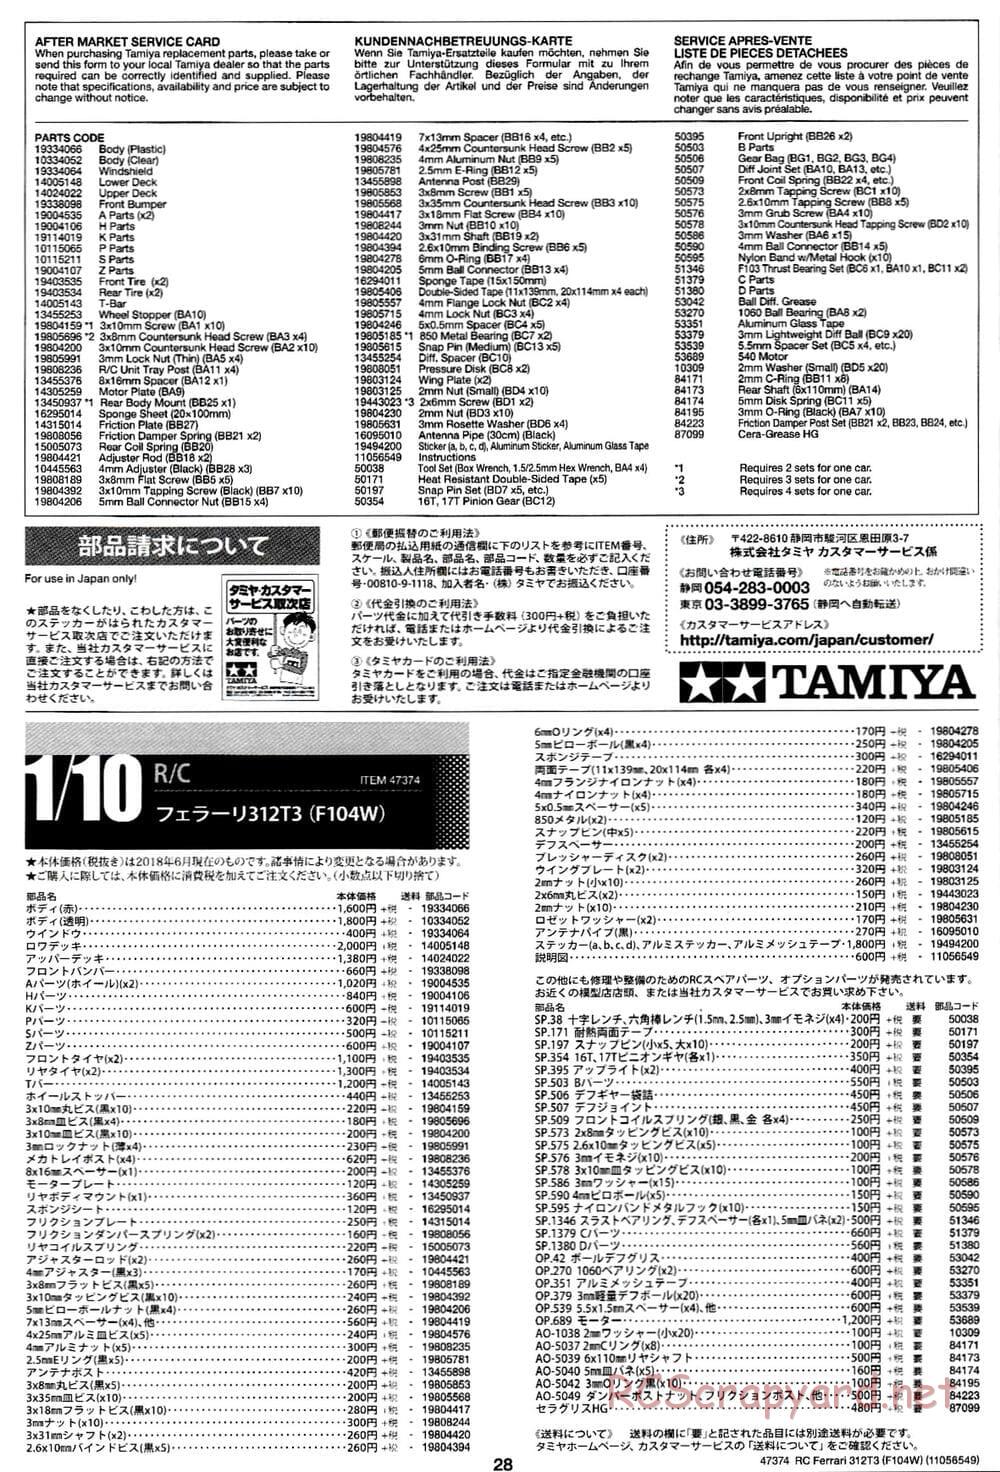 Tamiya - Ferrari 312T3 - F104W Chassis - Manual - Page 28